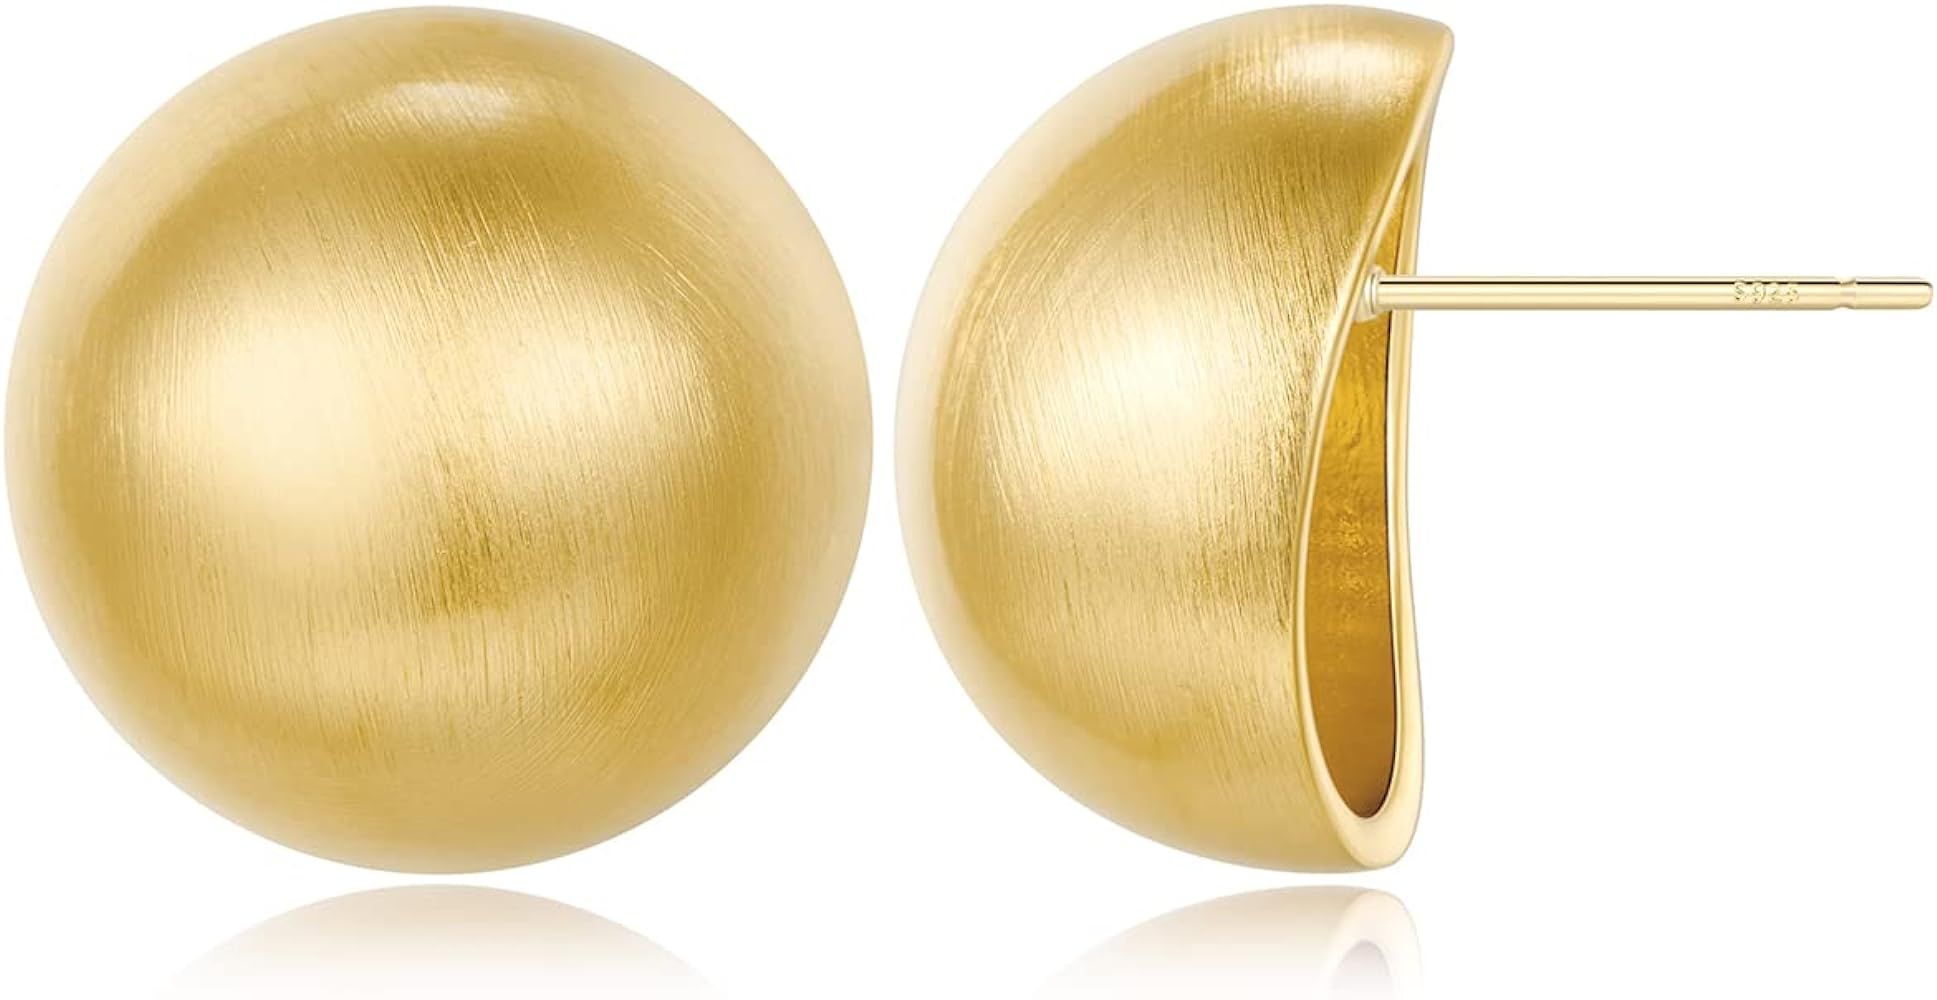 HESSAWELL Stud Earrings for Women Half-ball Mattle Gold Sliver Studs 14K Brushed Button Earrings ... | Amazon (US)